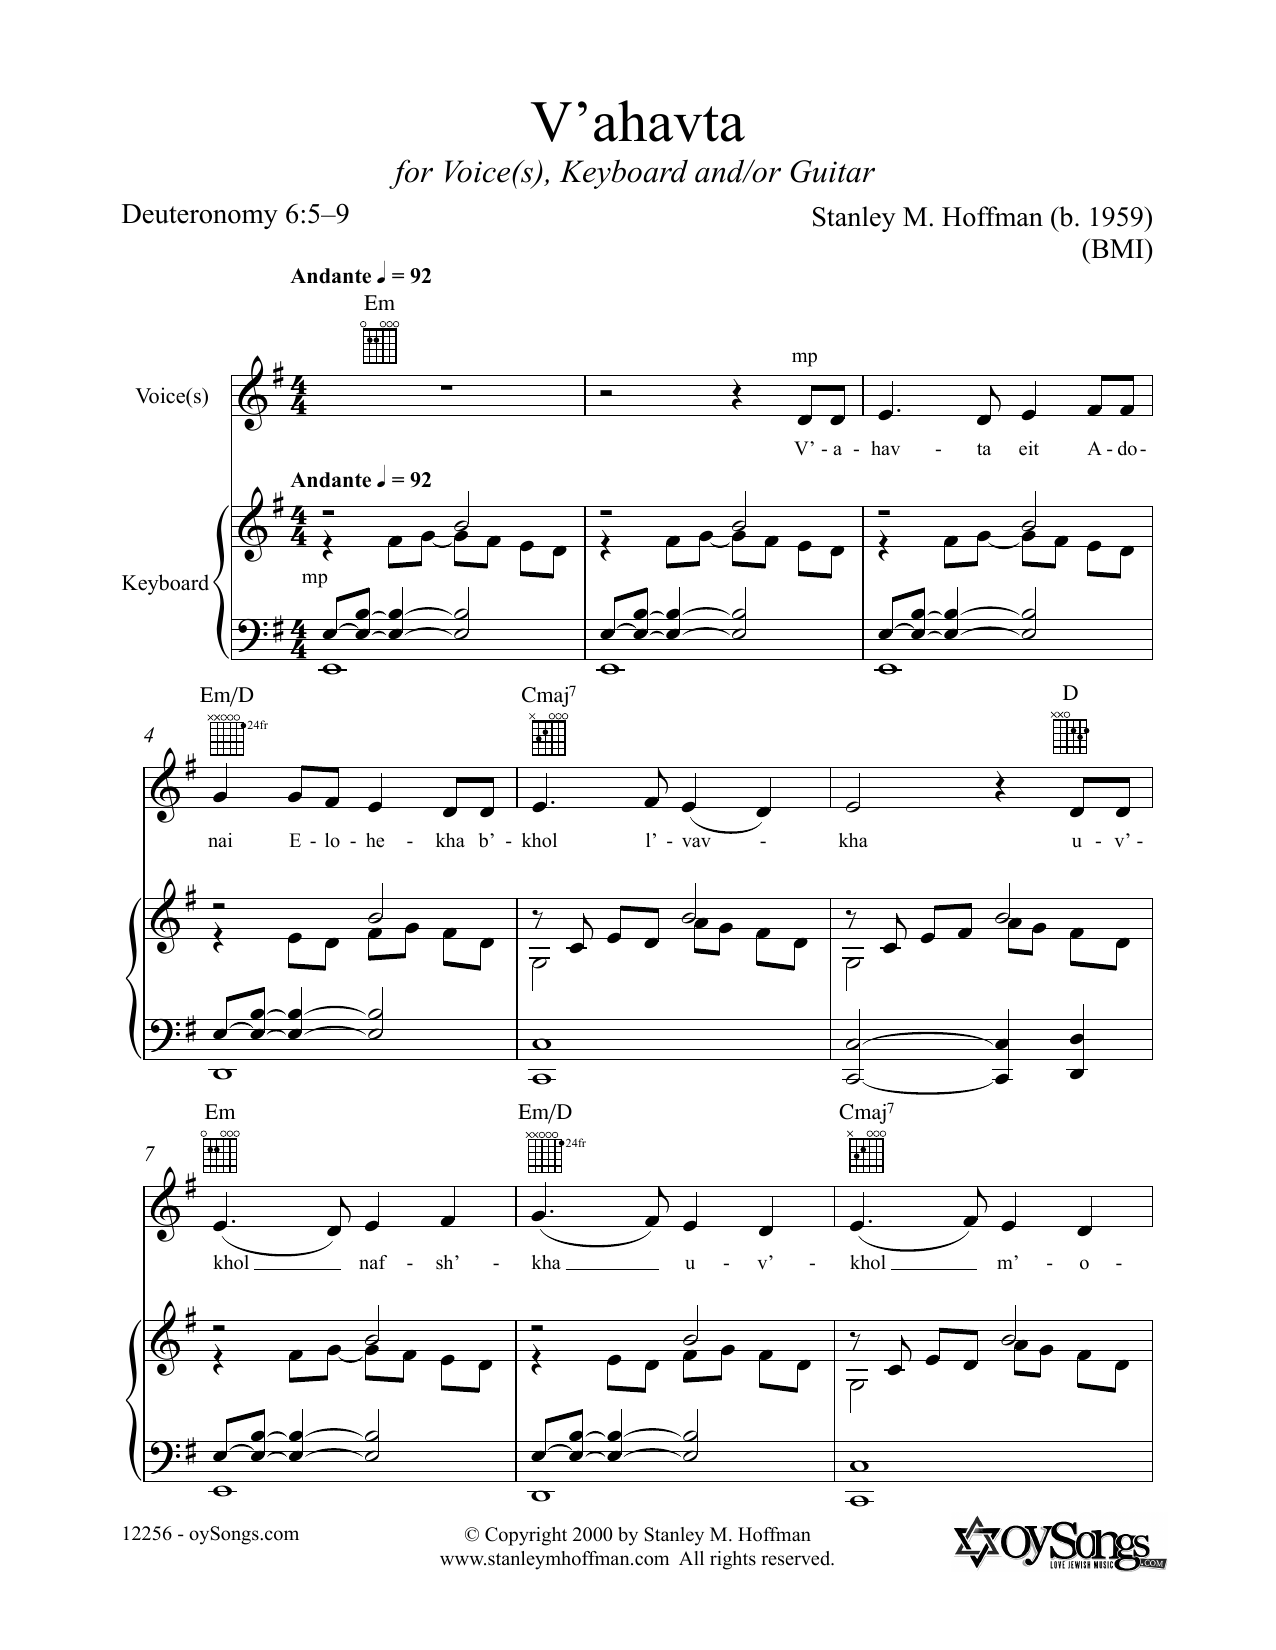 Download Stanley F. Hoffman V'ahatva Sheet Music